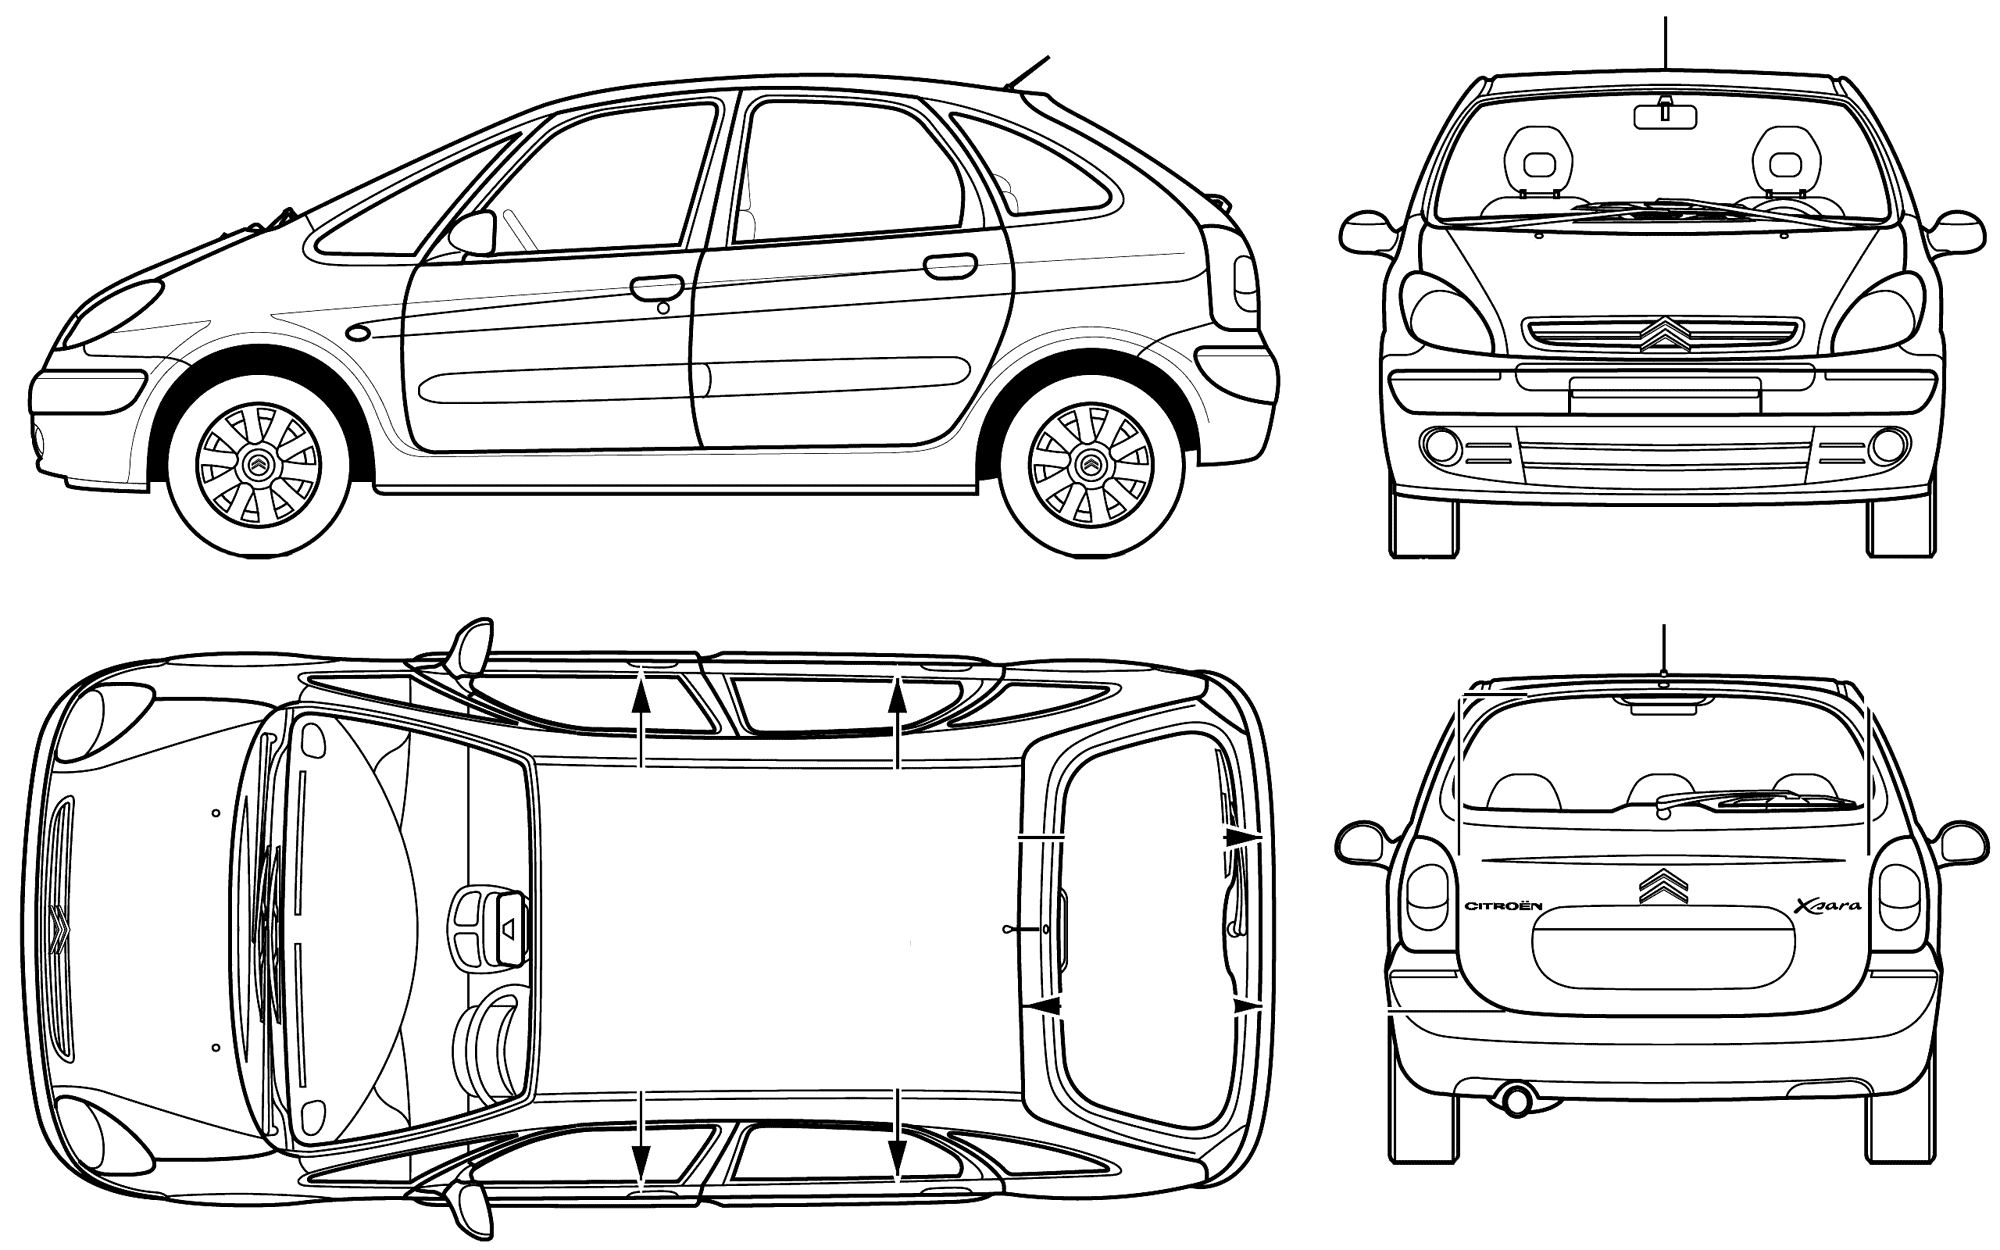 Citroën Xsara Picasso blueprint